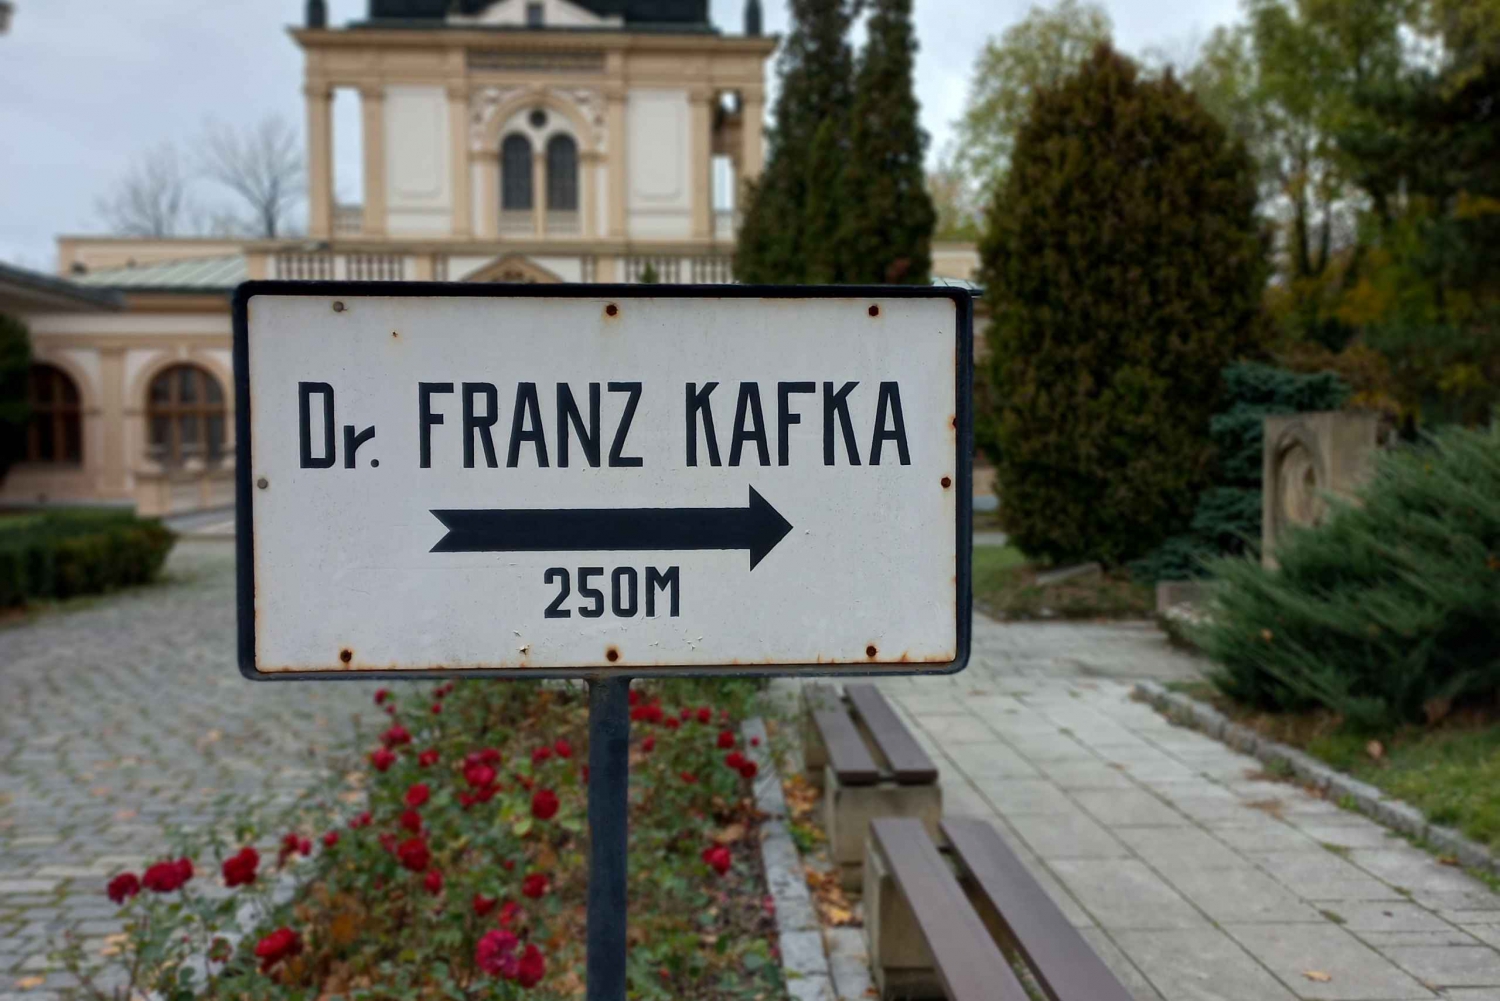 Franz Kafka and his Prague